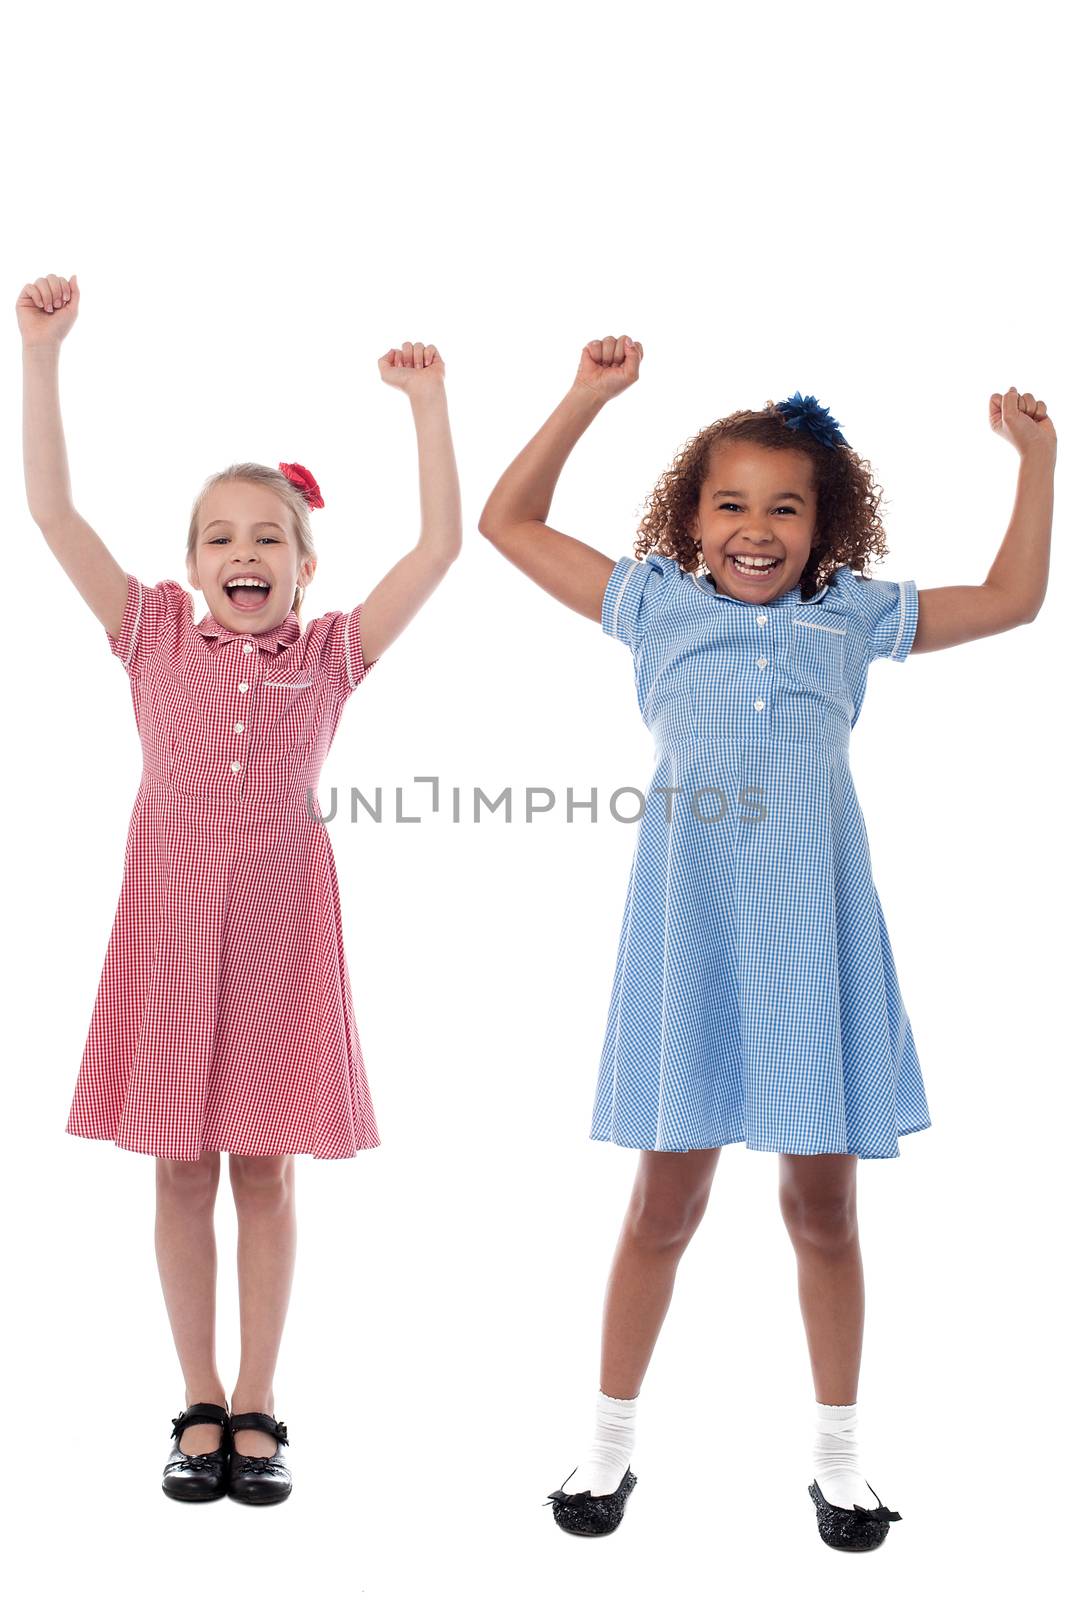 Enthusiastic school girls full of excitement